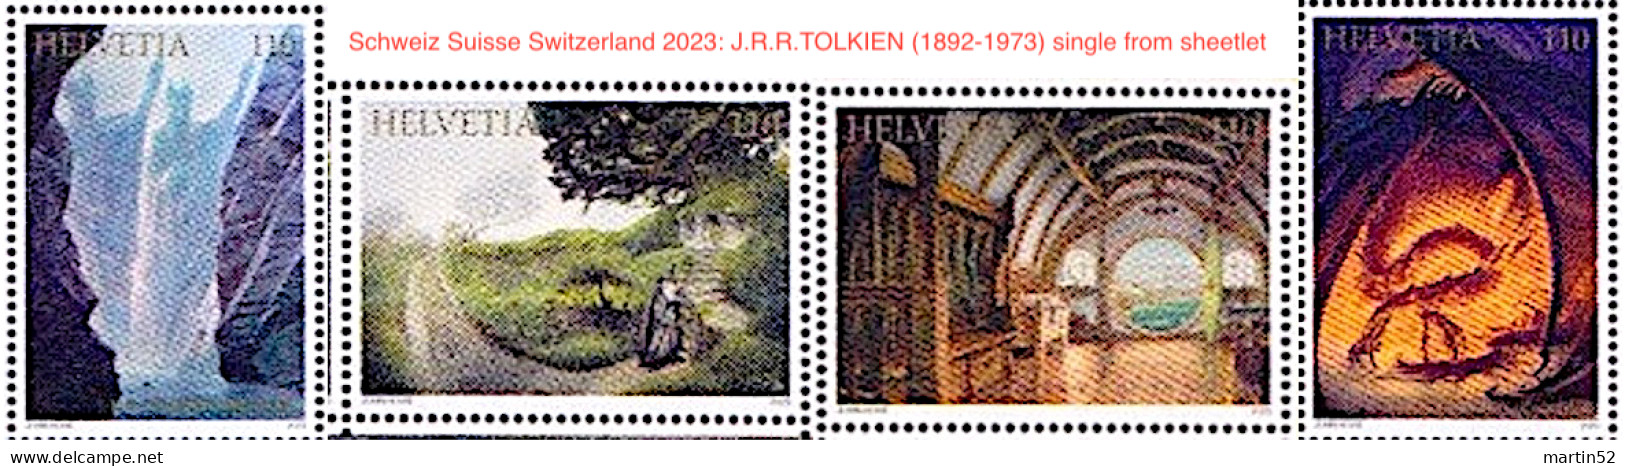 Schweiz Suisse Switzerland 2023: J.R.R.TOLKIEN (1892-1973) Single From Sheetlets Selbstklebend Autocollant Self-adhesive - Mythologie